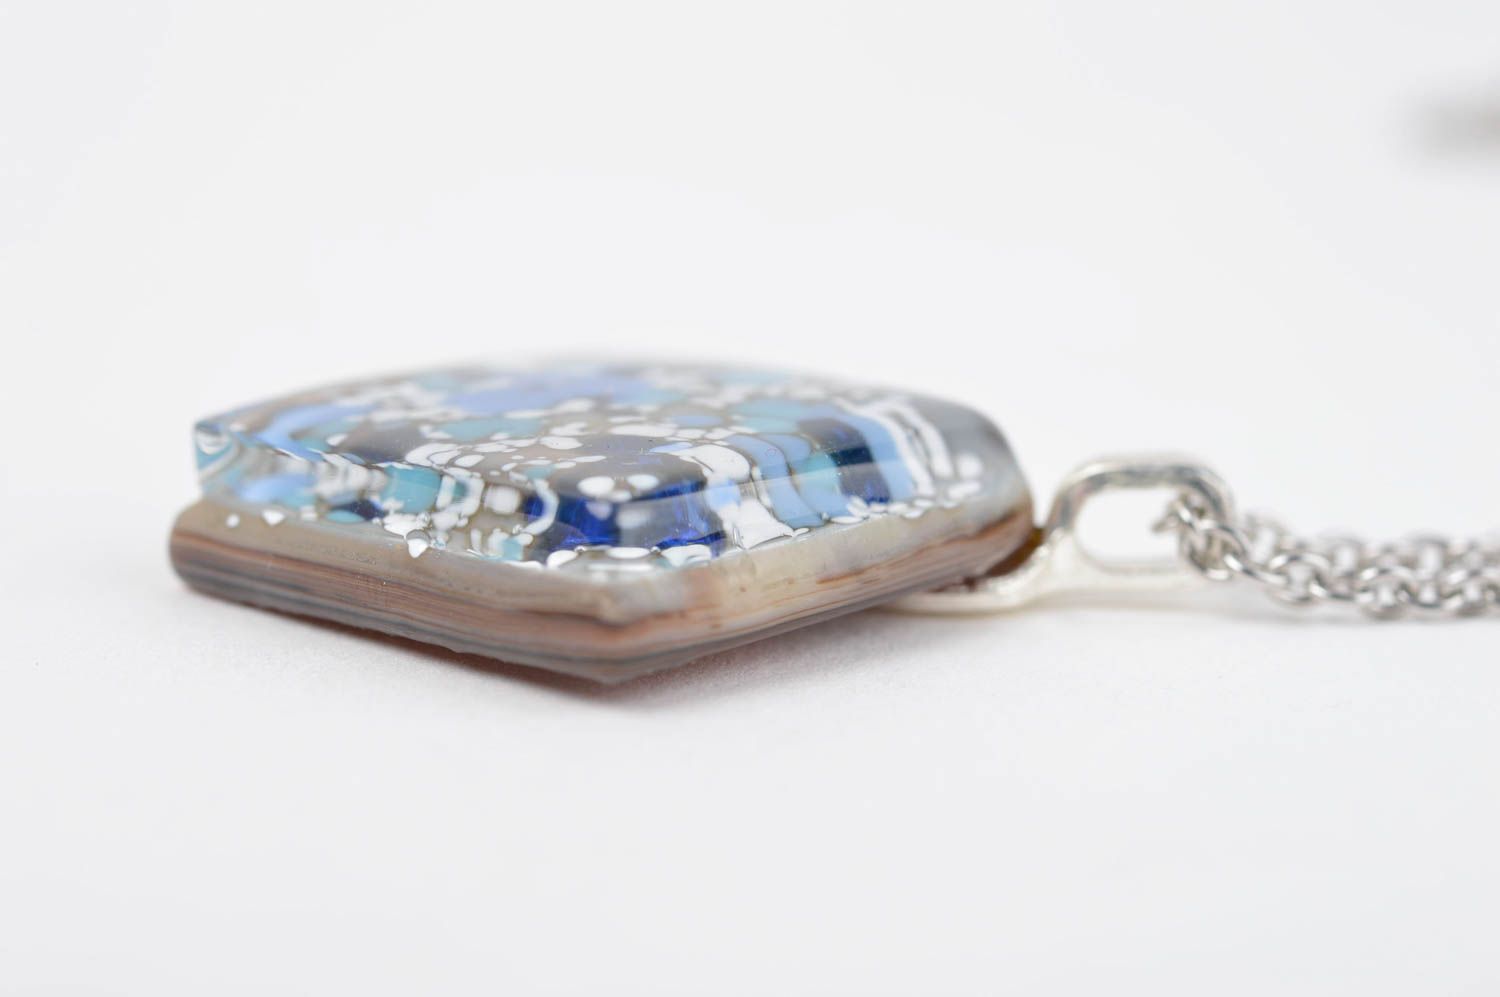 Handmade pendant designer accessory unusual jewelry gift ideas gift for women photo 2